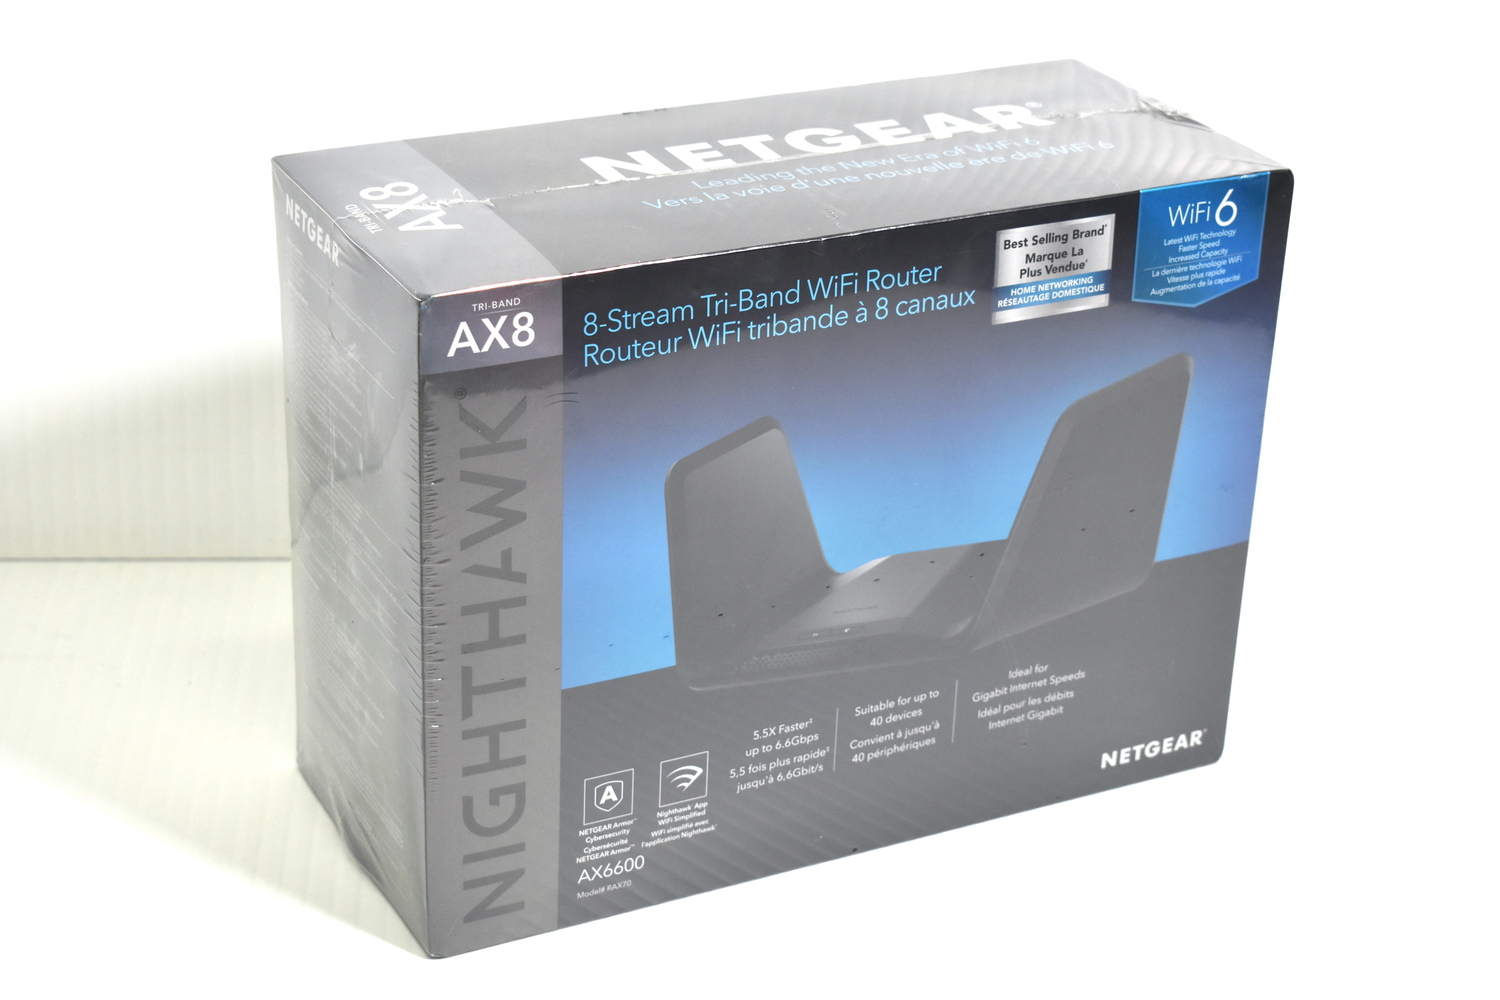 Nighthawk AX8 WiFi 6 Router